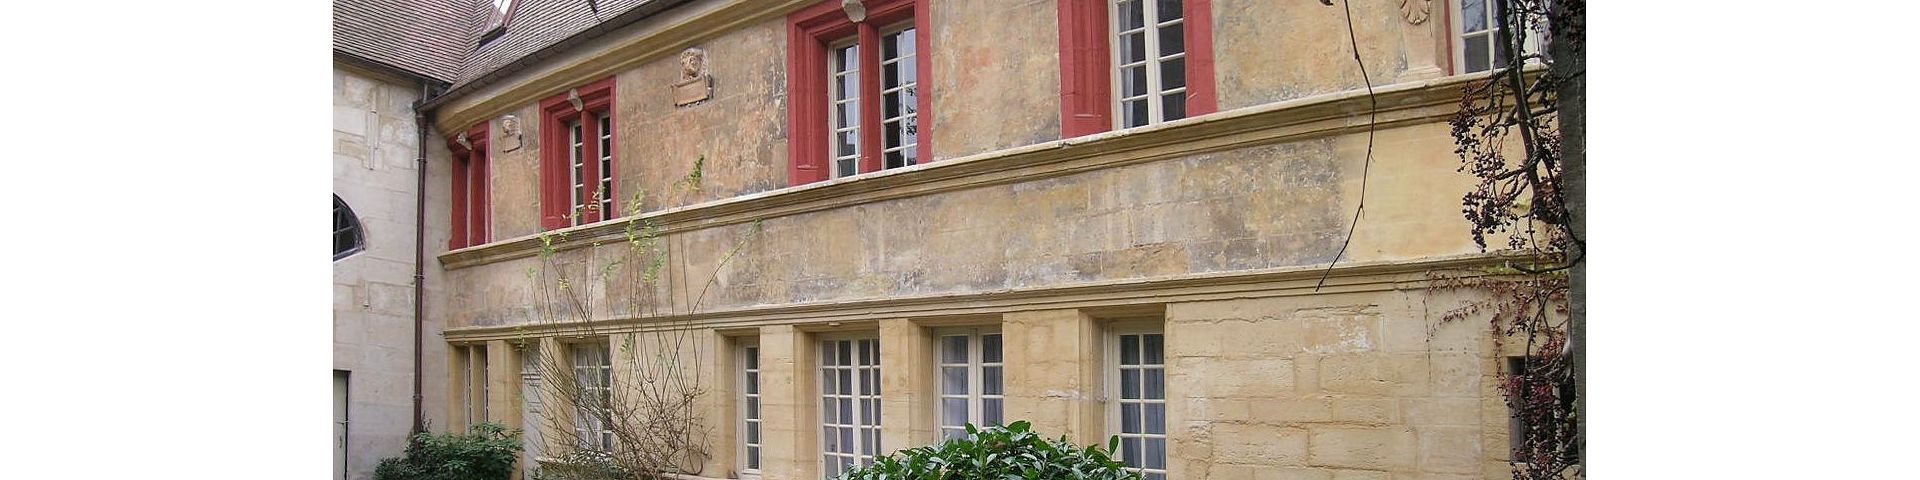 Dijon - Hôtel de Samerey (21)